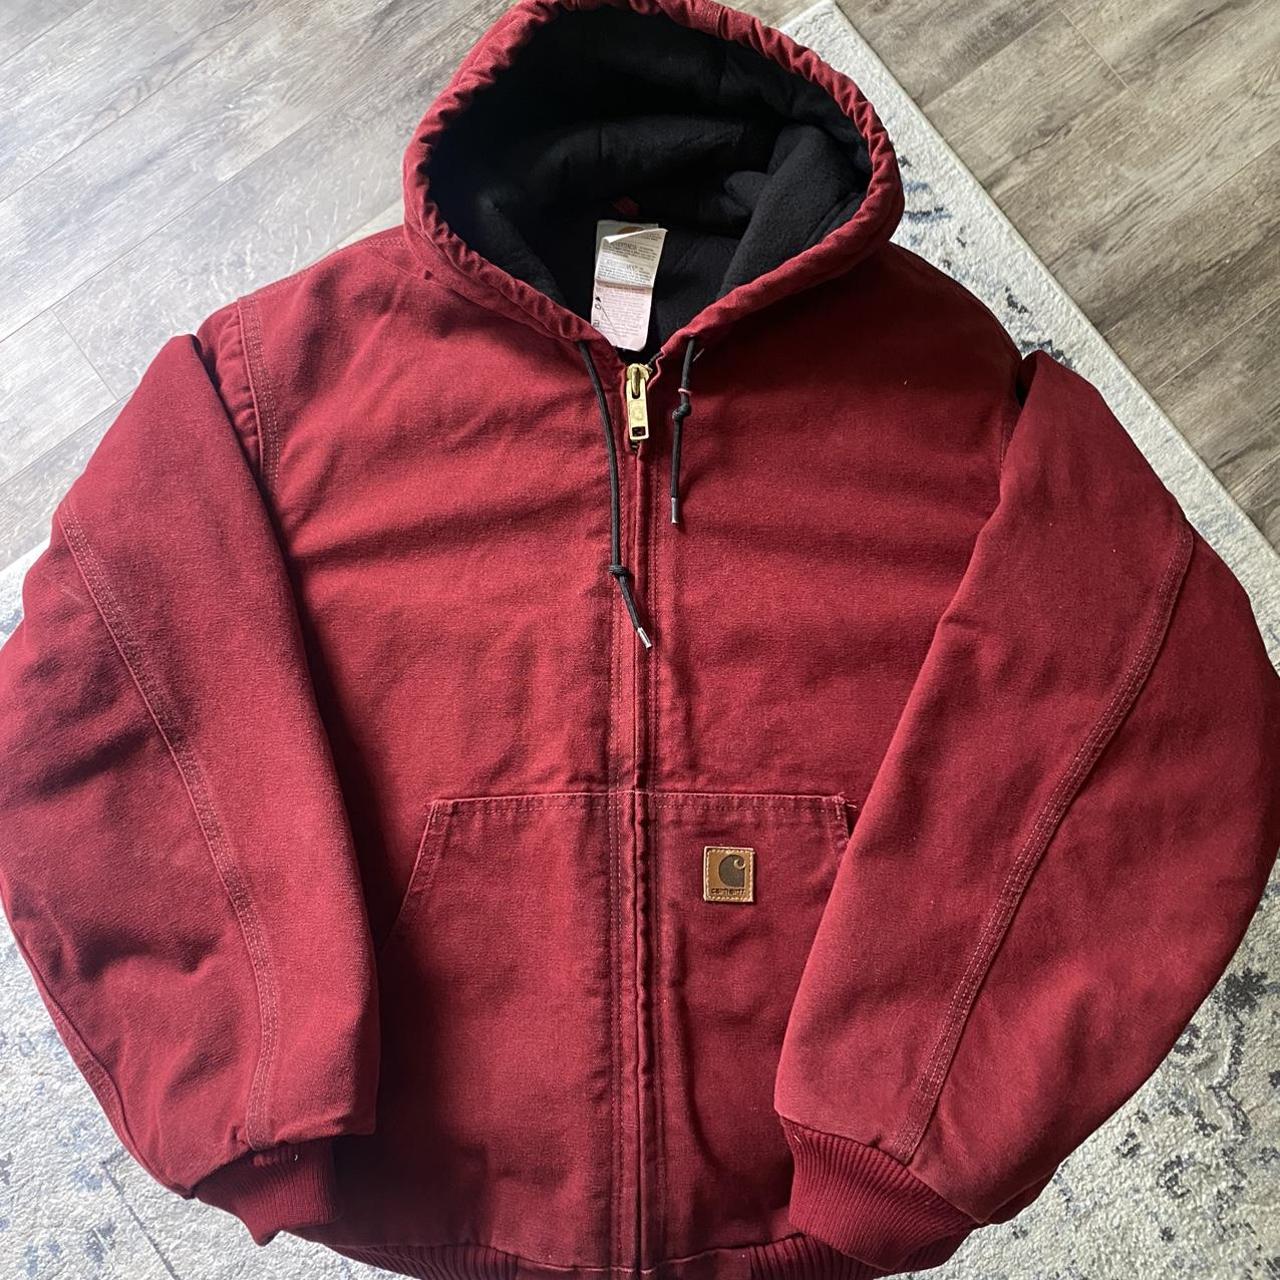 Vintage Red Carhartt Jacket ️ - Like New - No... - Depop